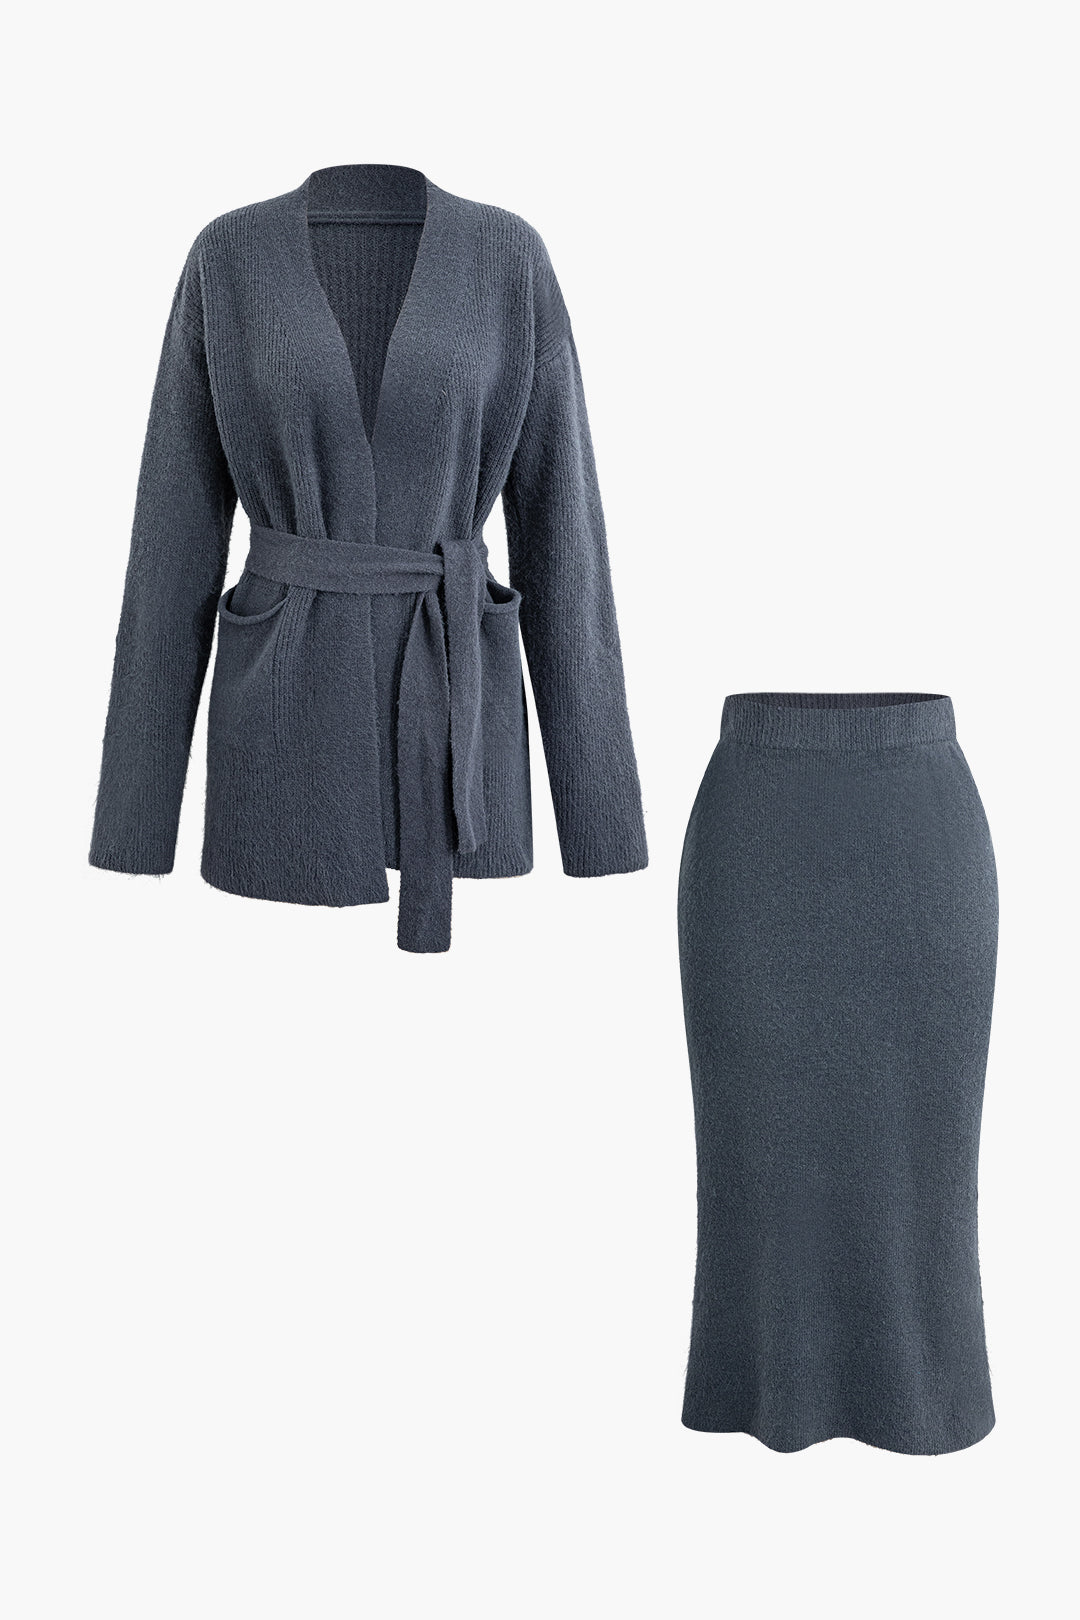 Solid Pocket Tie Knit Cardigan And Midi Skirt Set